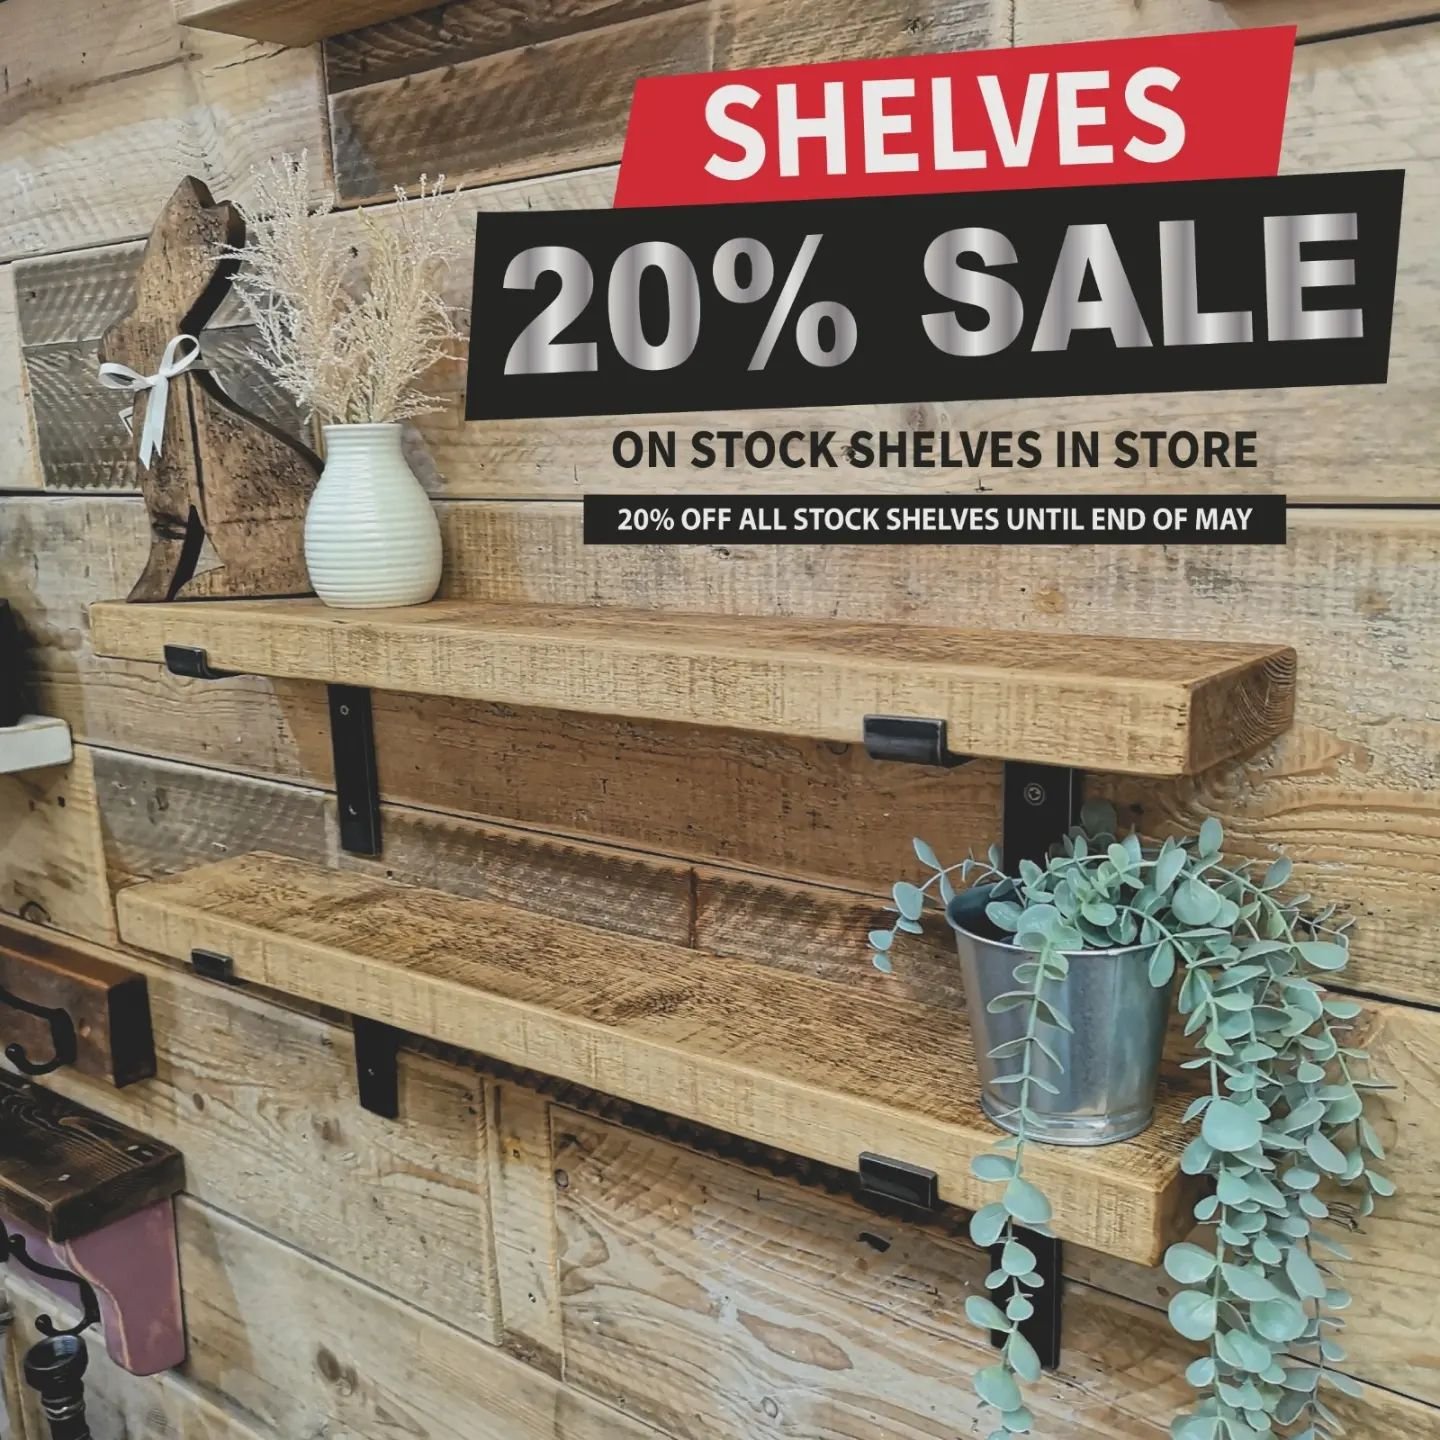 Shelfie Sale! We've got lots of shelves in store now on sale until the end of May.

#sale #shelfie #rusticshelves #shelfstyling #shelfies #shelfinspo #shelfbrackets #shelvesofinstagram #plantsofinstagram #shelf #shelves #rusticdecor #homeinspo #homel